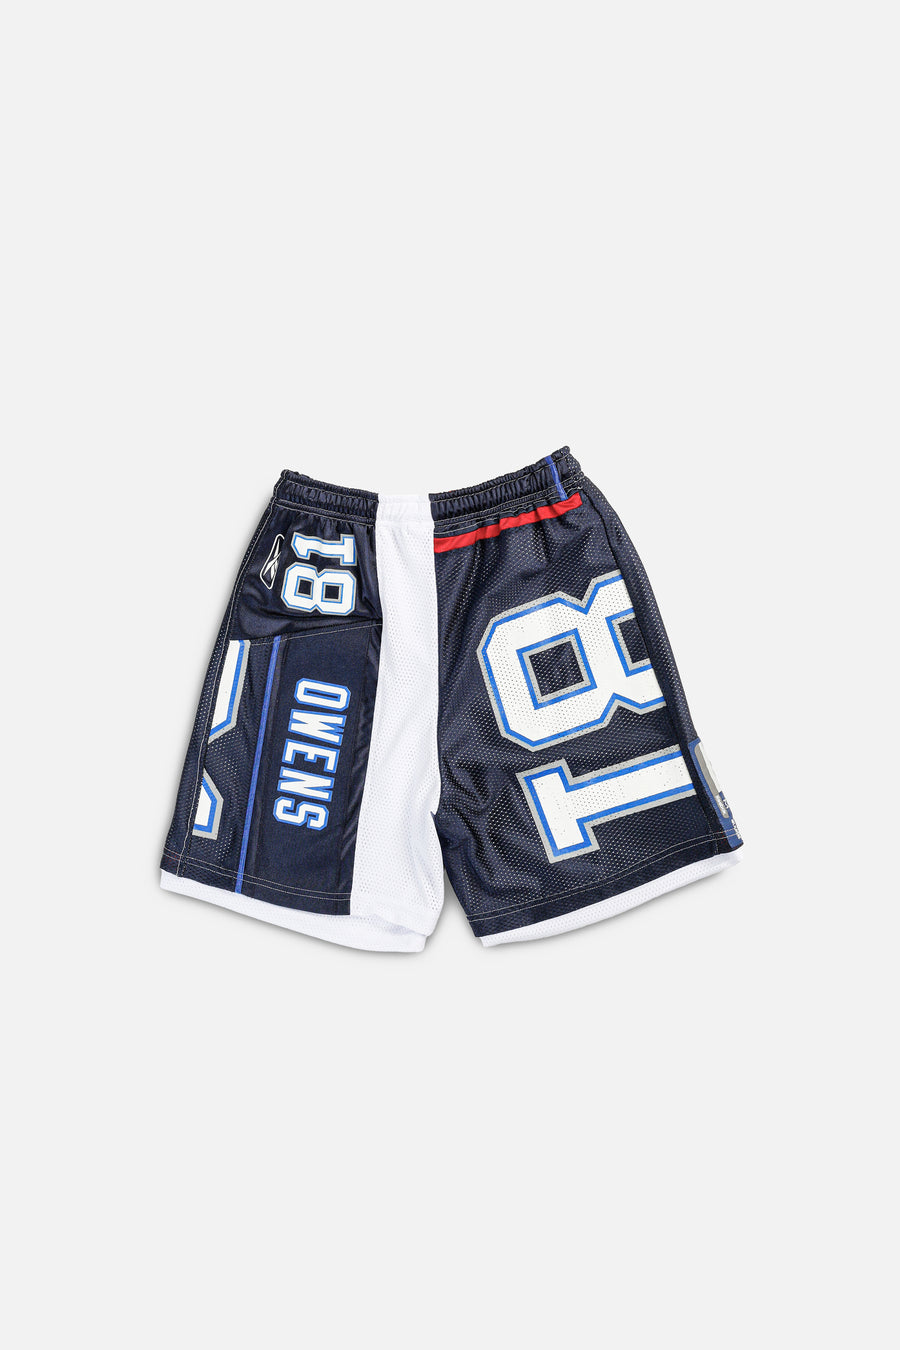 Unisex Rework Buffalo Bills NFL Jersey Shorts - M